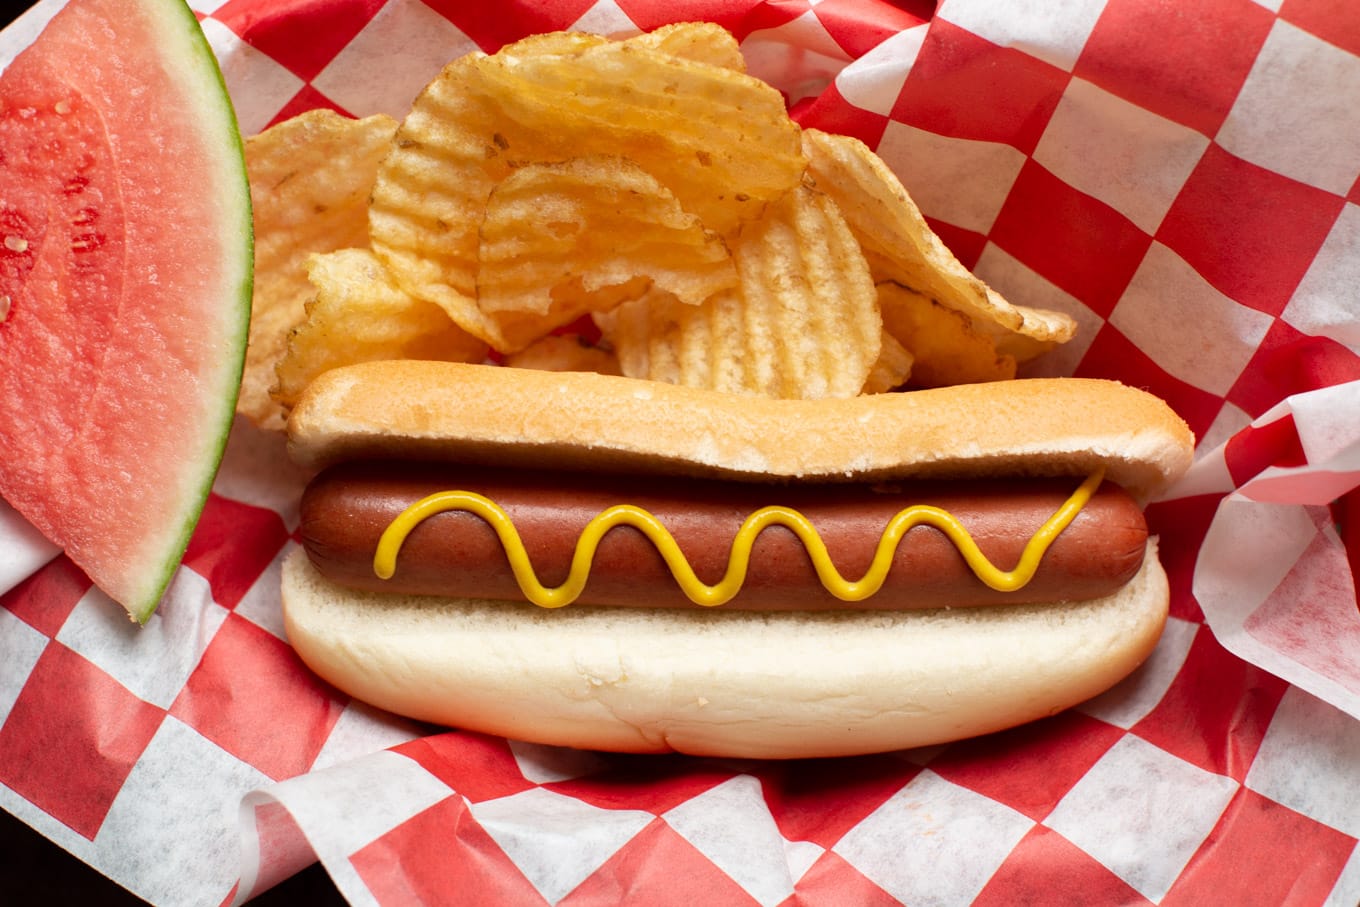 A hot dog on a bun